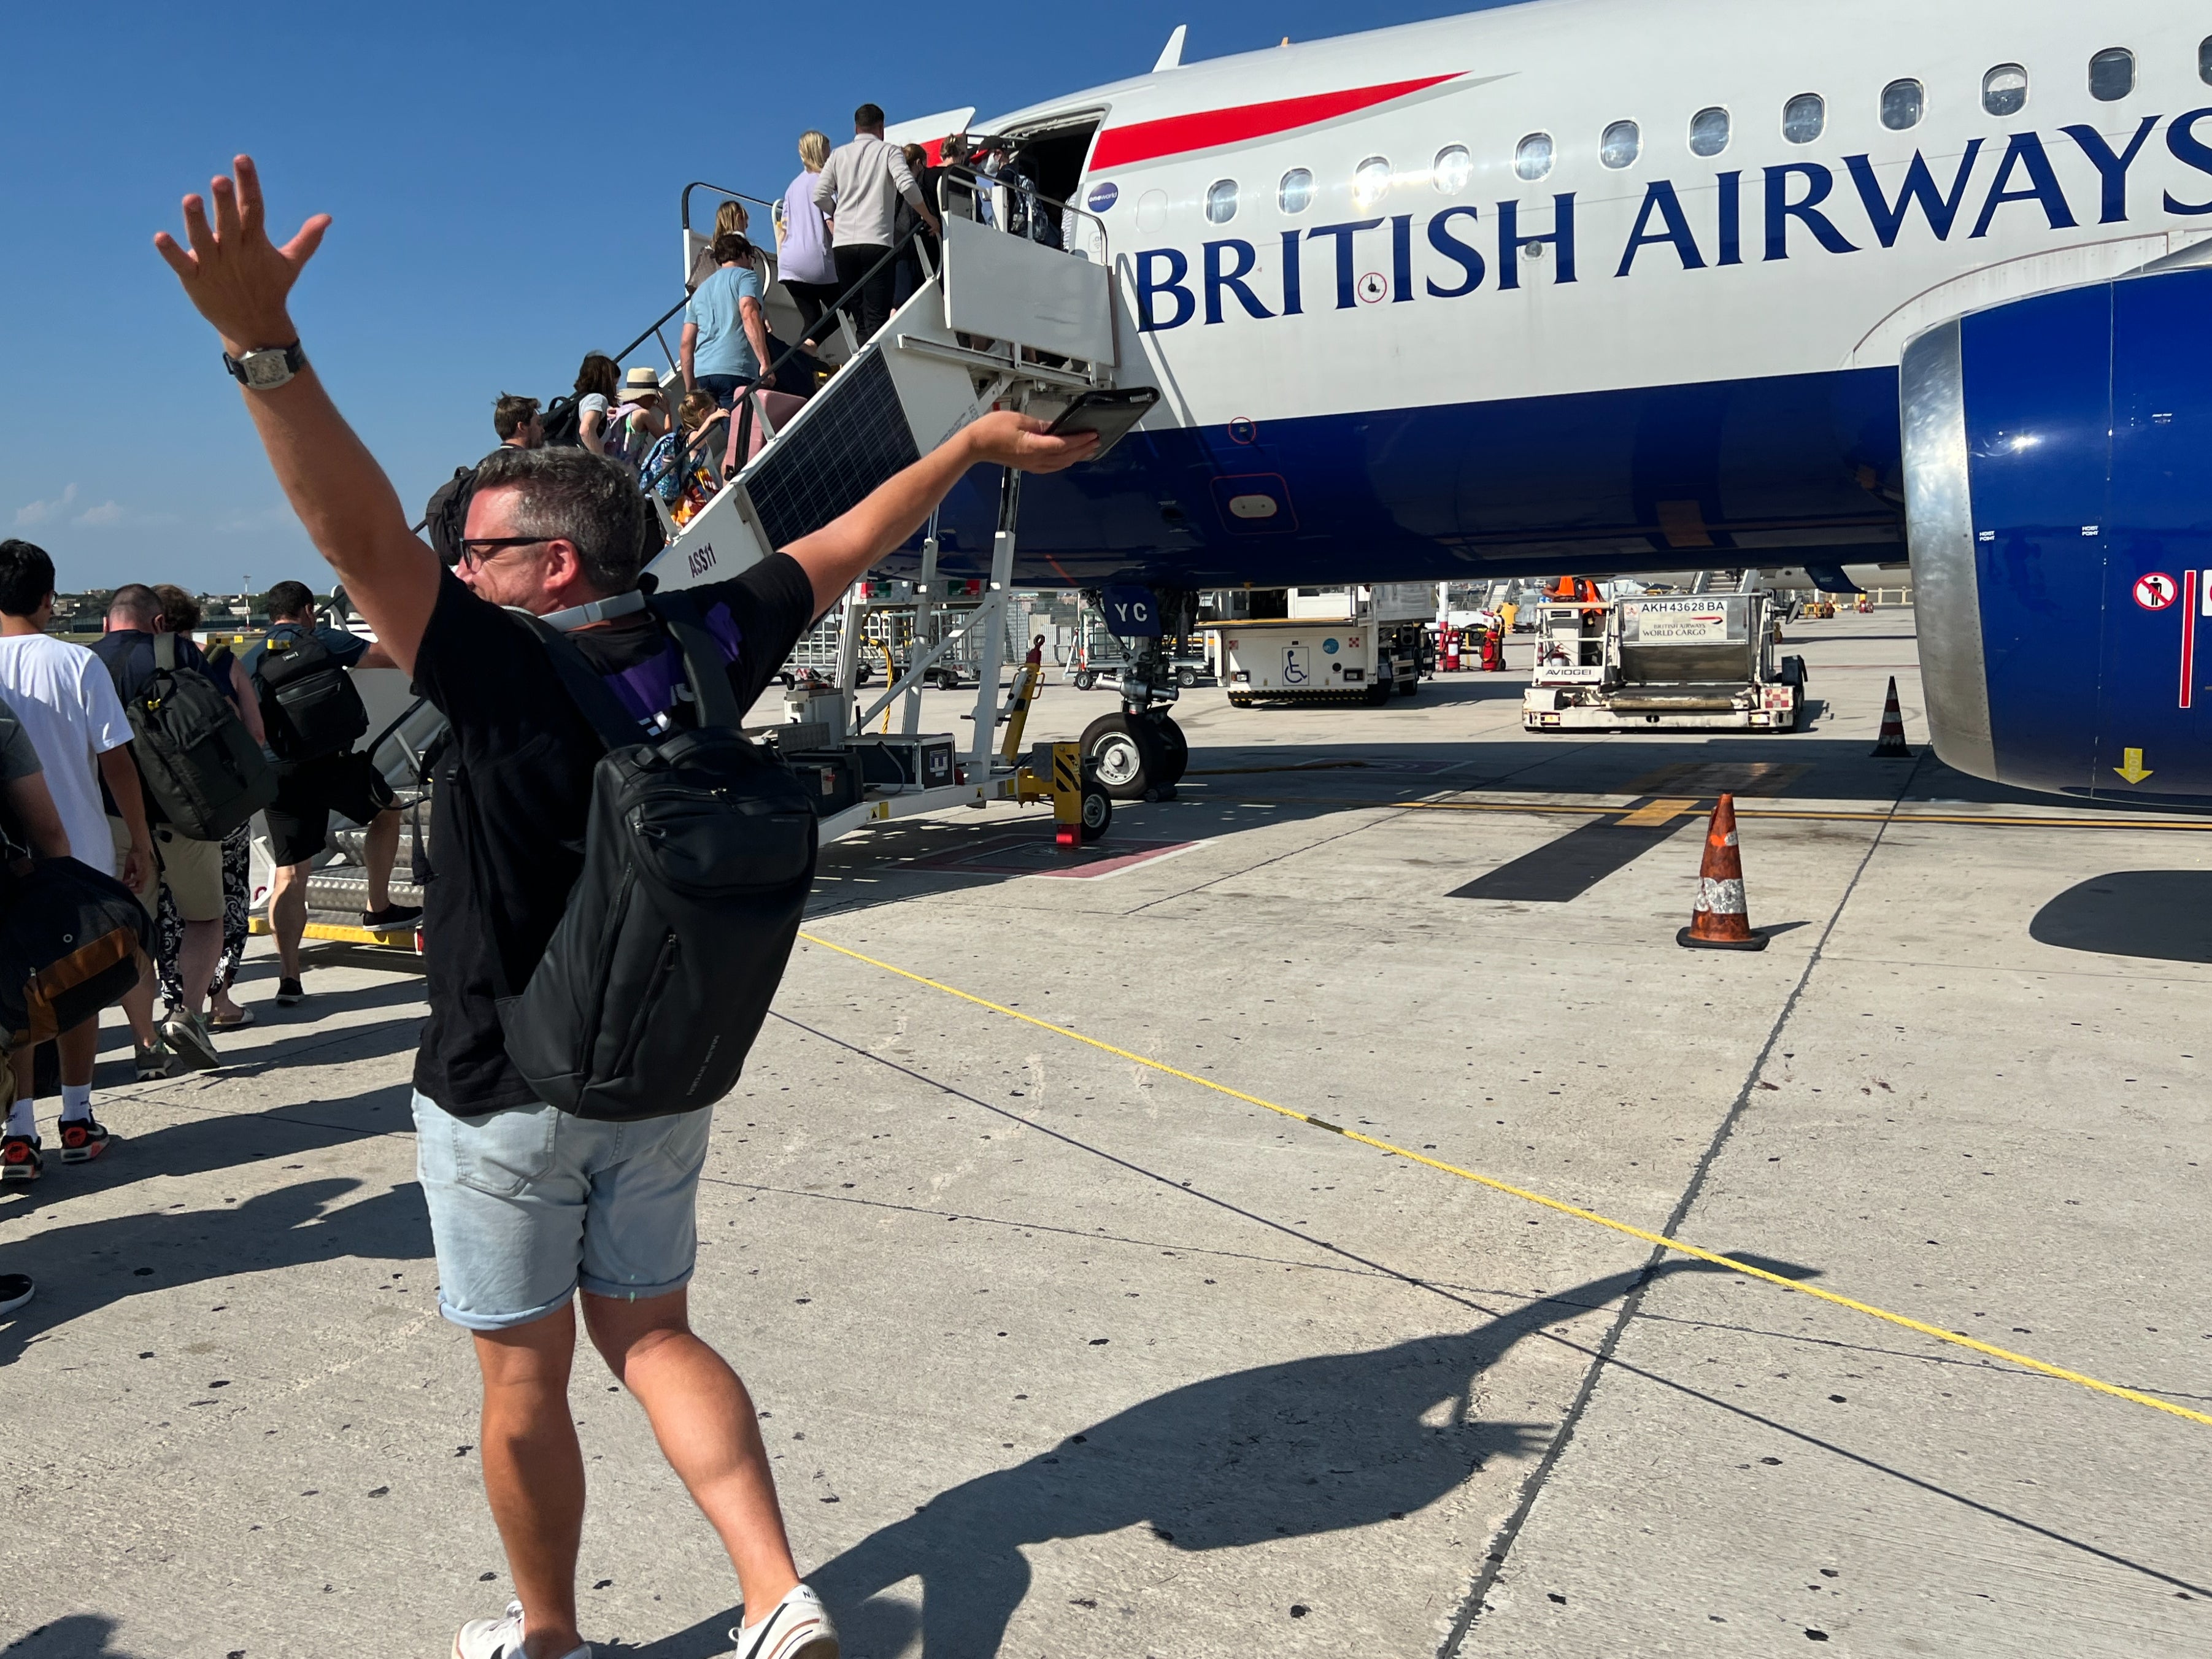 En route: British Airways passenger celebrates the imminent departure of a delayed flight to London Heathrow